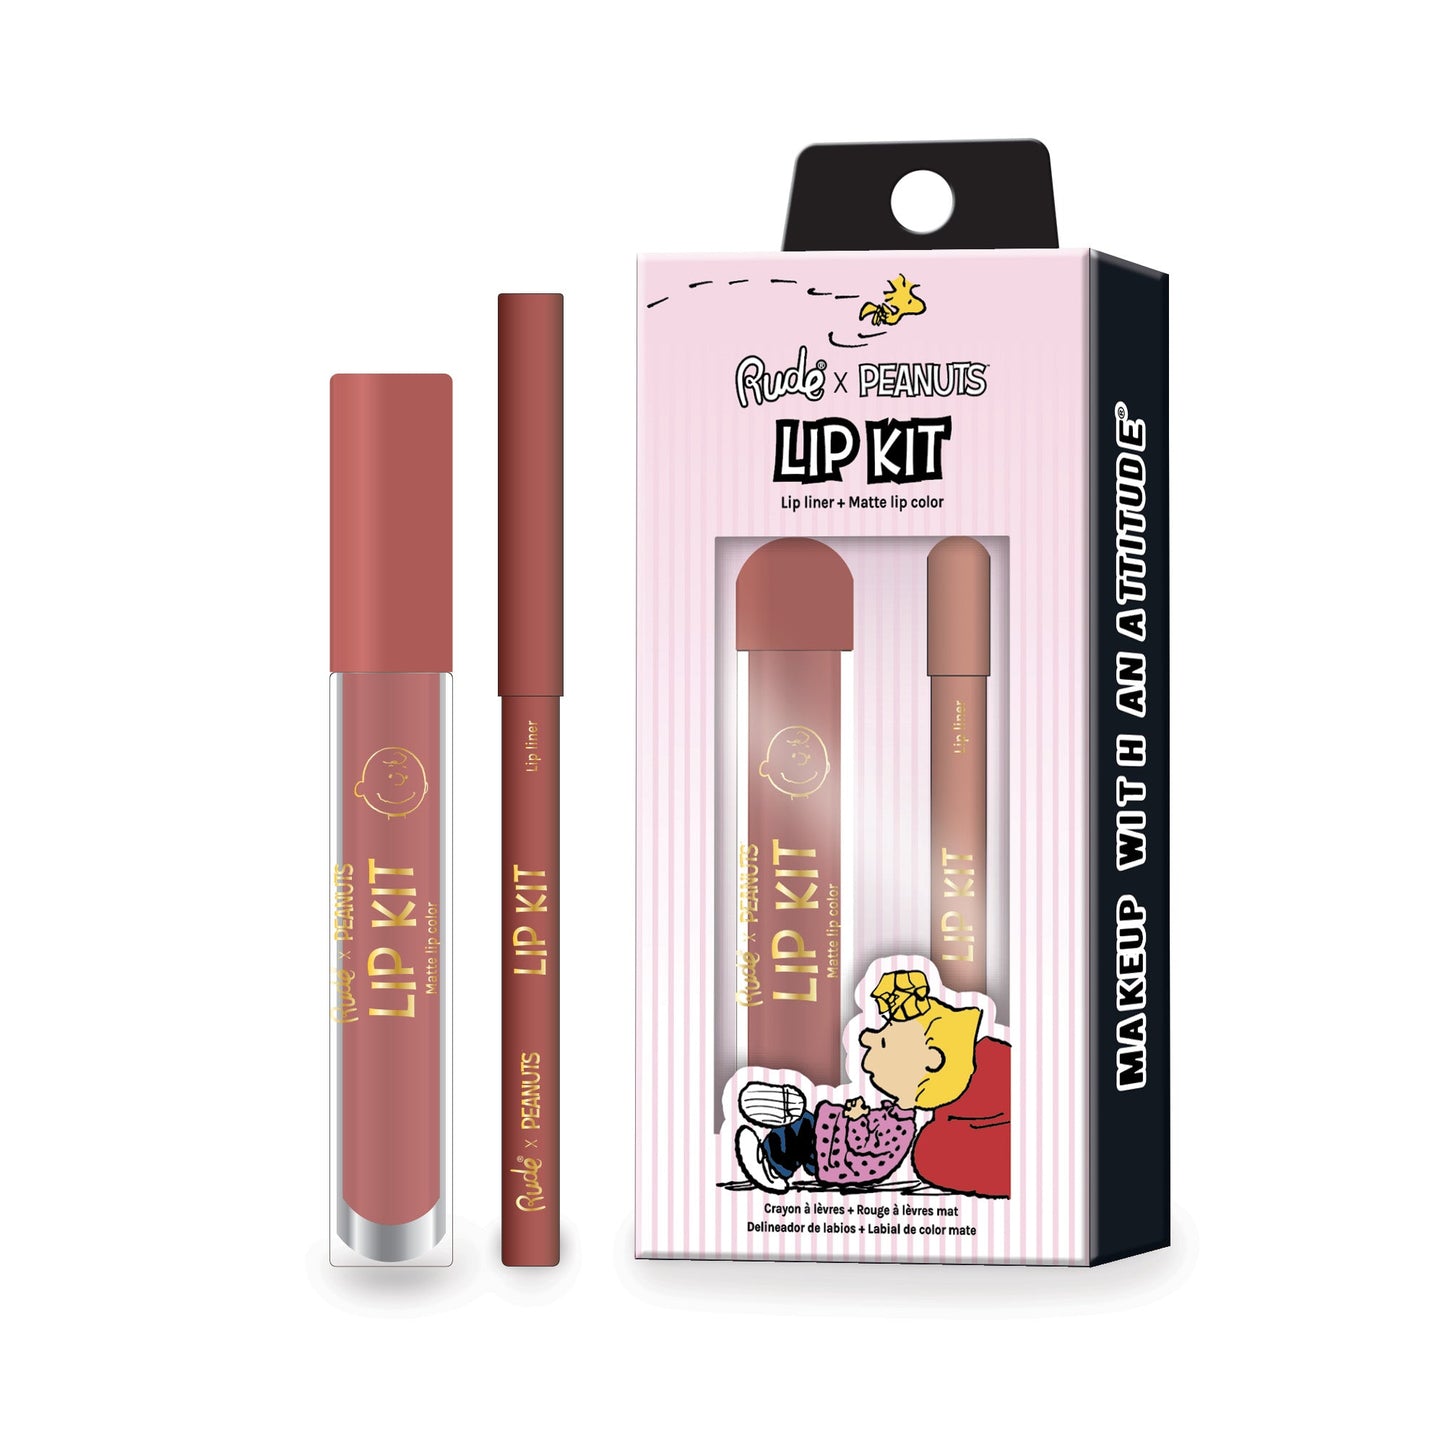 Peanuts Lip Kit - Lip Liner + Matte Lip Color